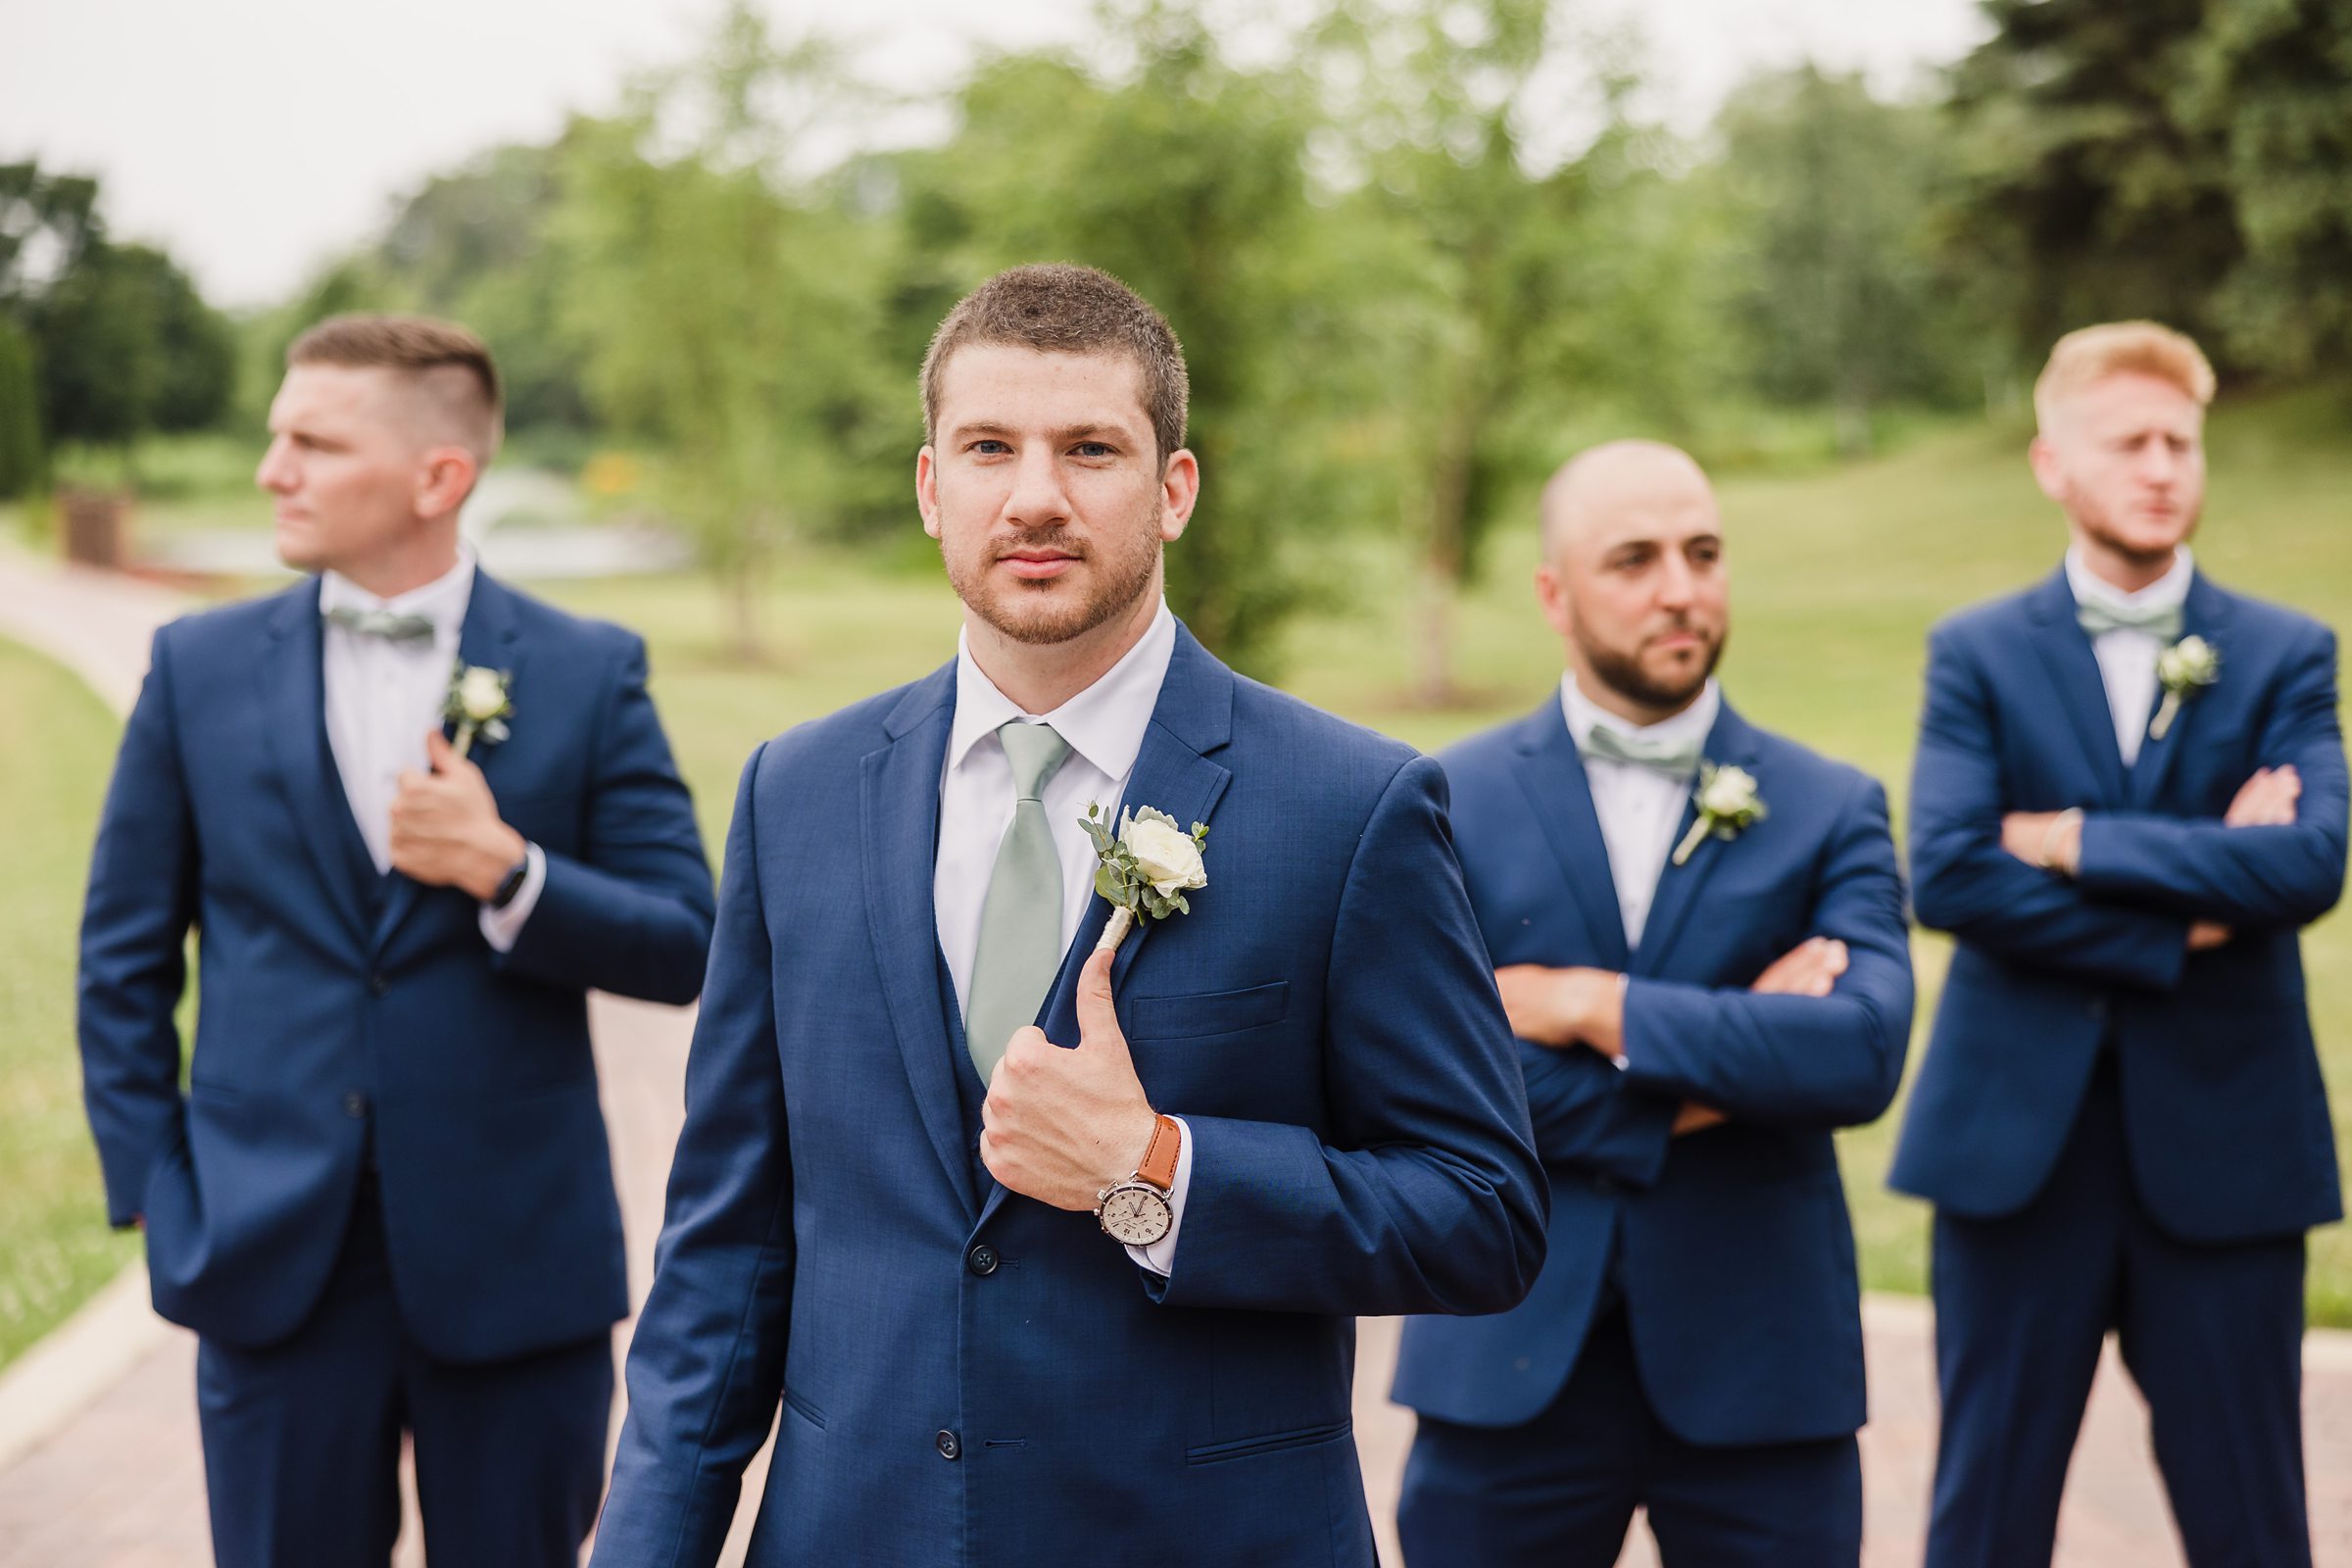 Groom and groomsmen during his wedding at the Fisherman's Inn in Elburn, Illinois.